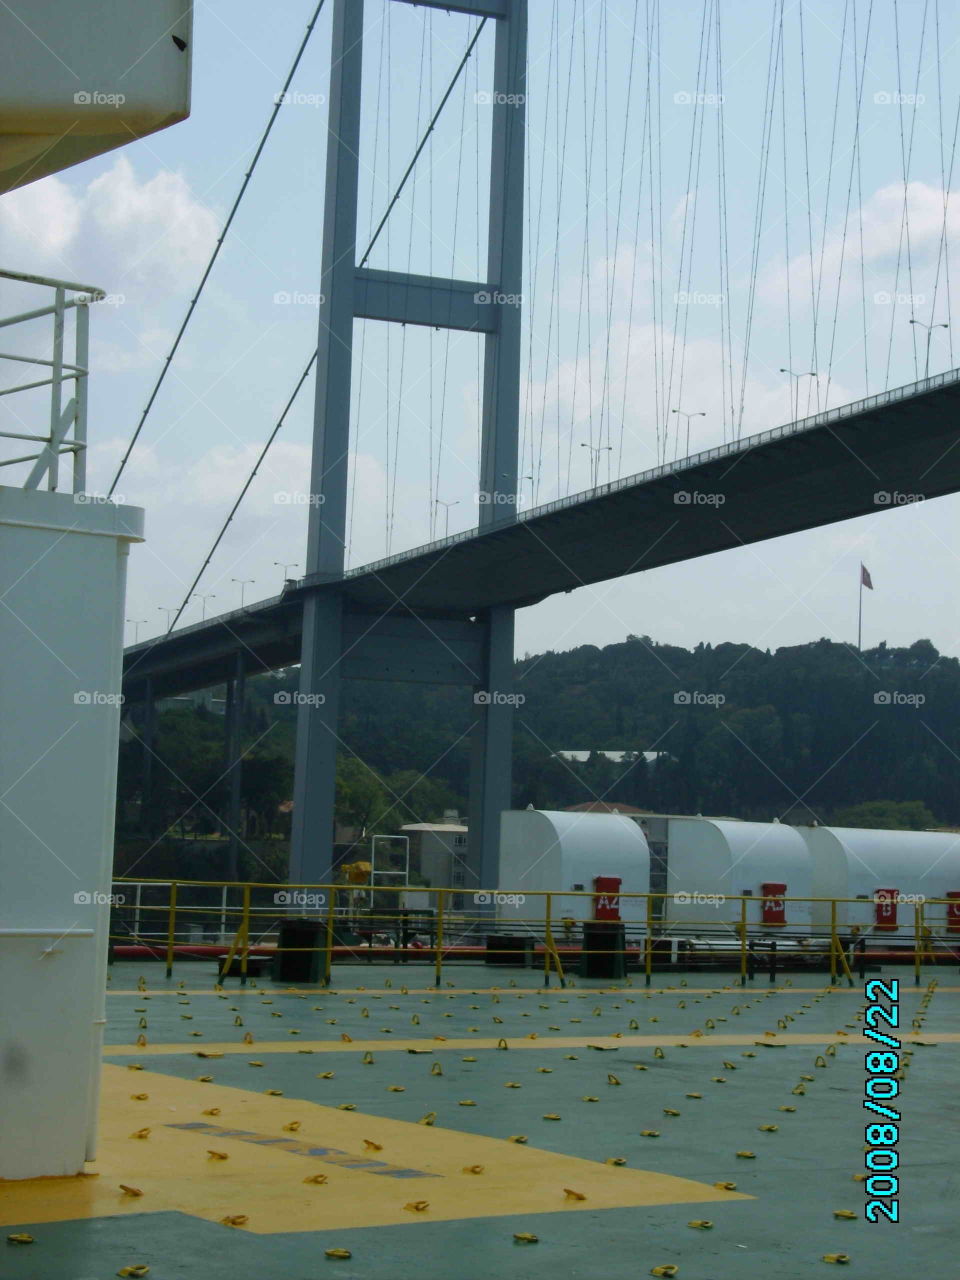 #ship#passing#overhear#bridge#istanbul#turkey#morning#time#sunlight#